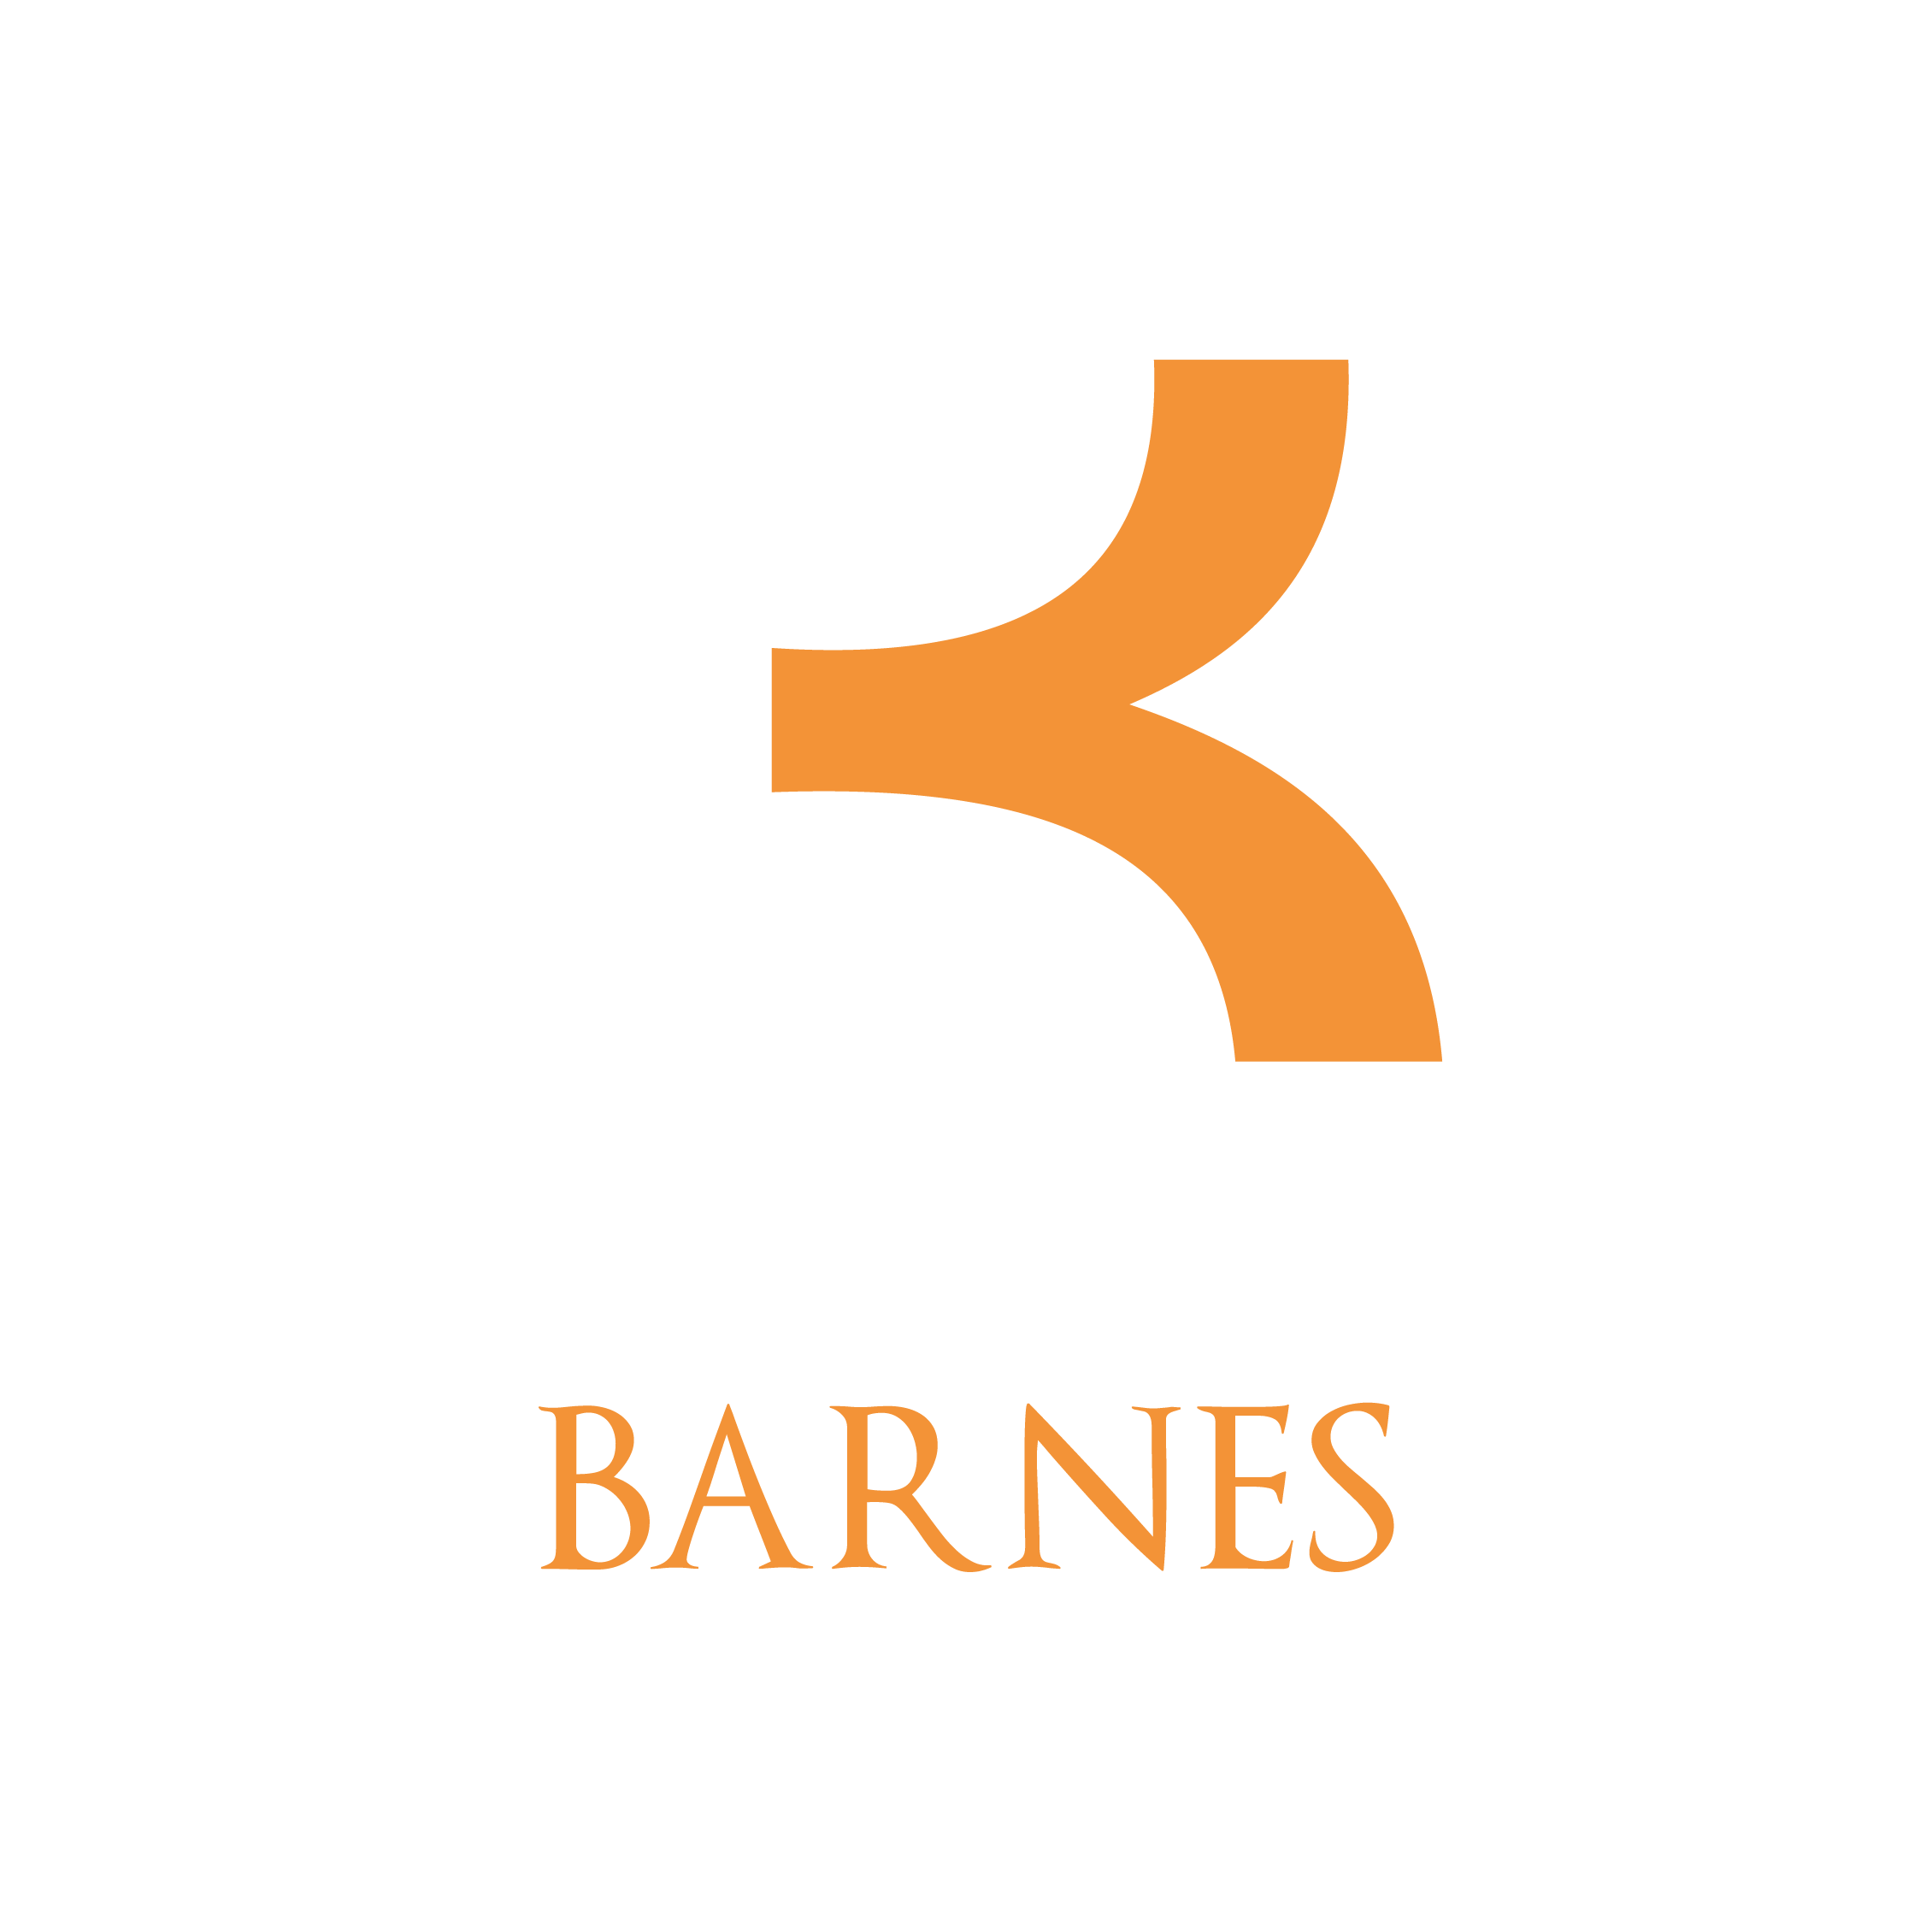 Kingston Barnes